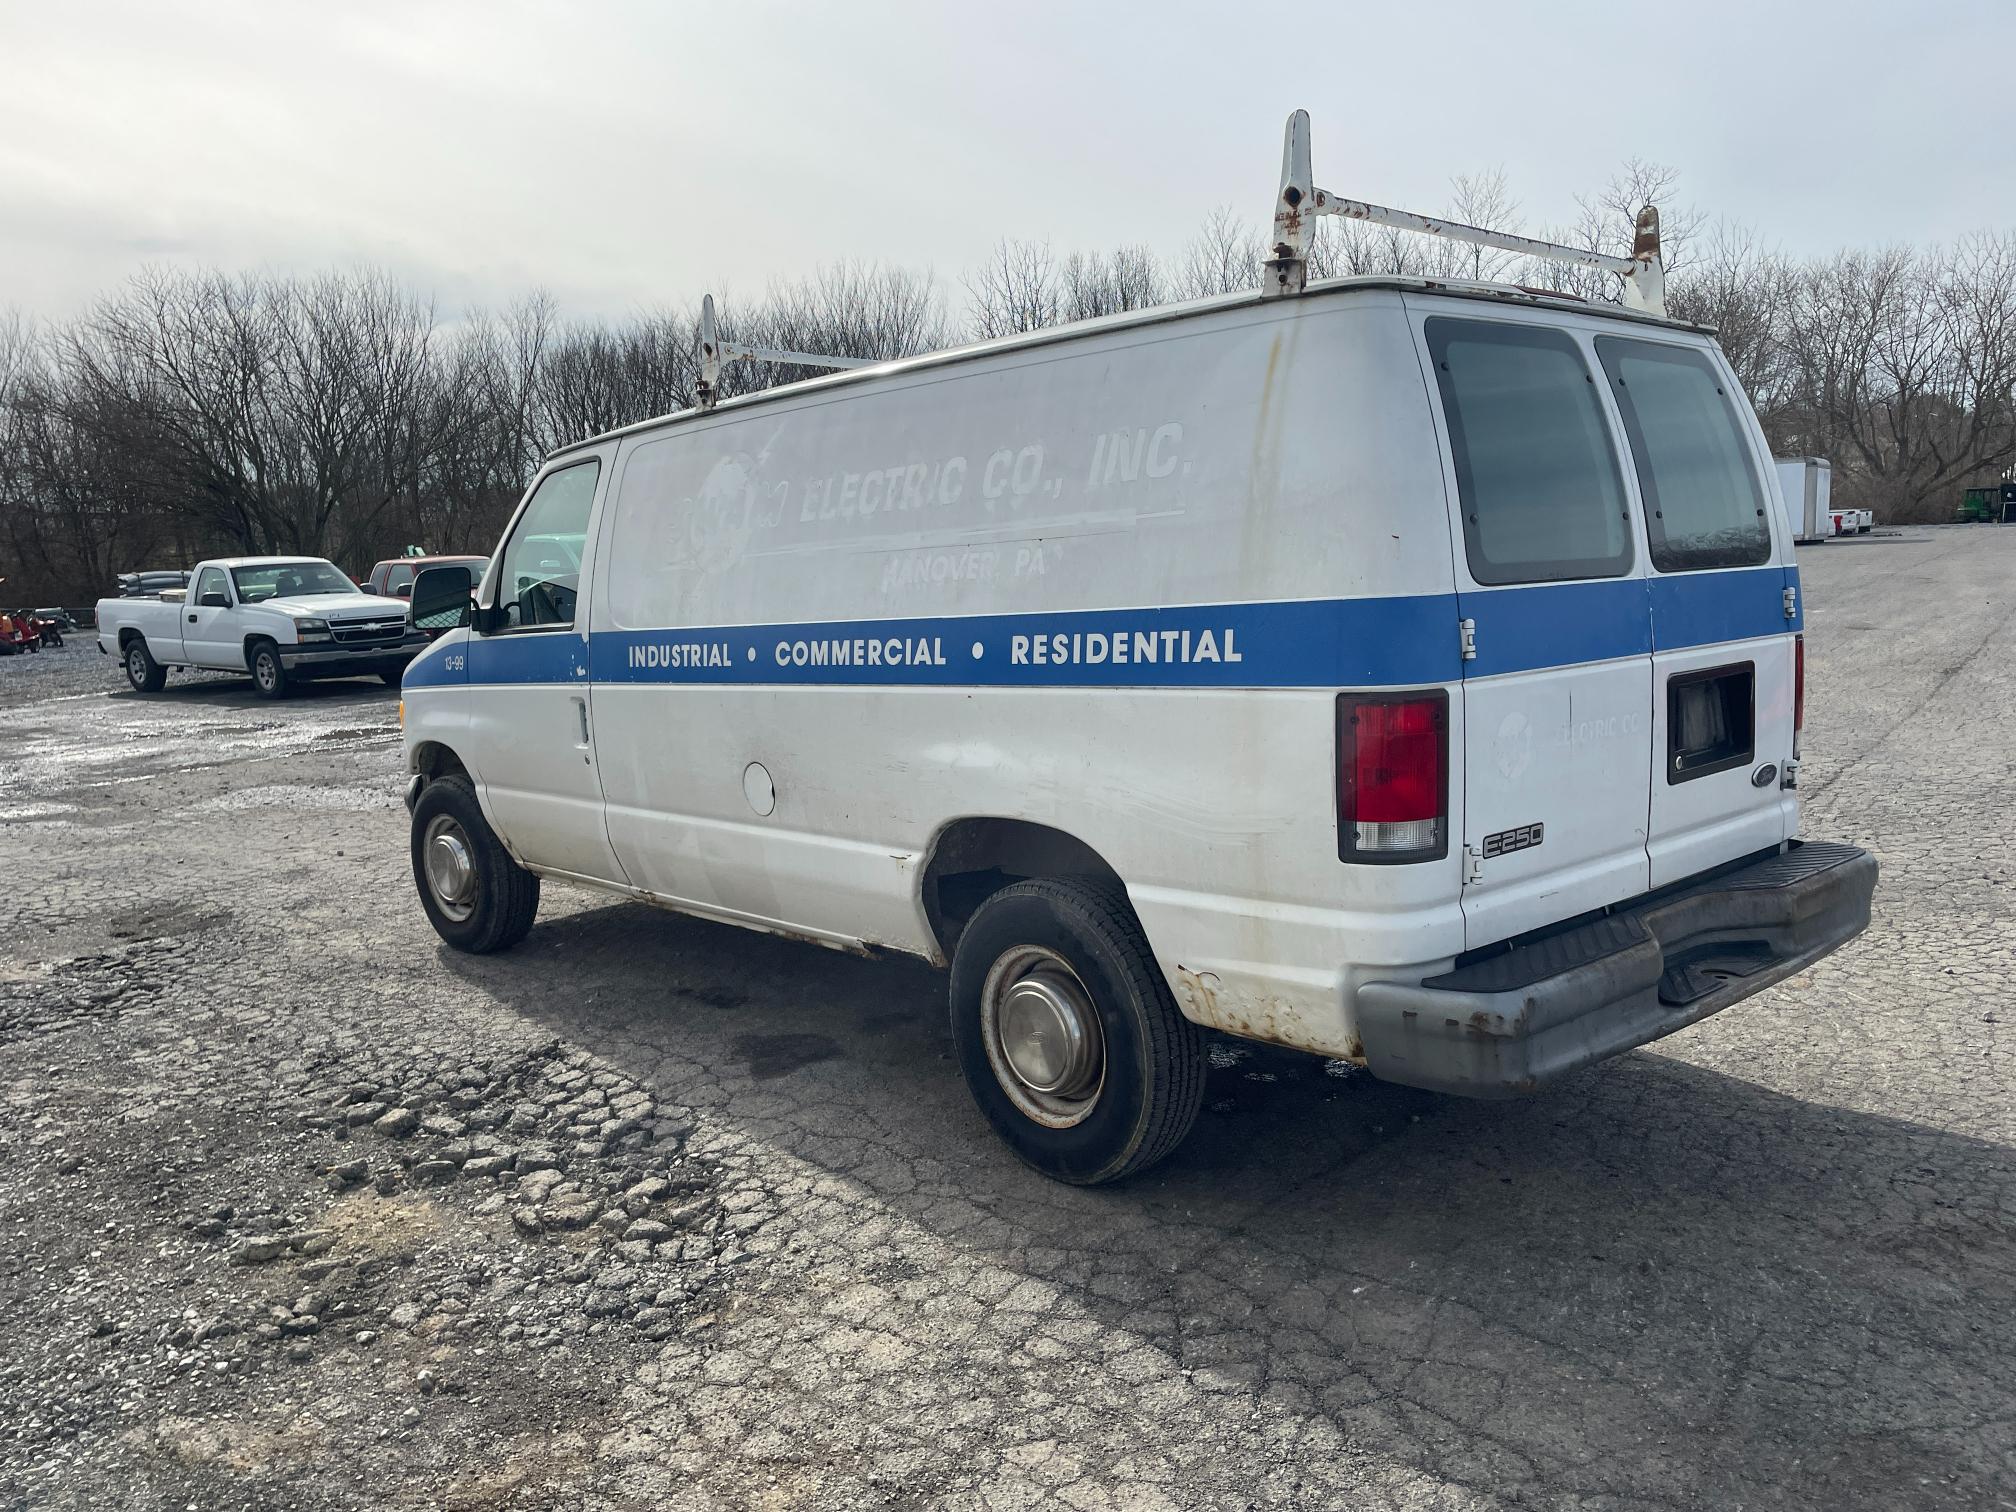 1999 Ford E250 Cargo/ Utility Van